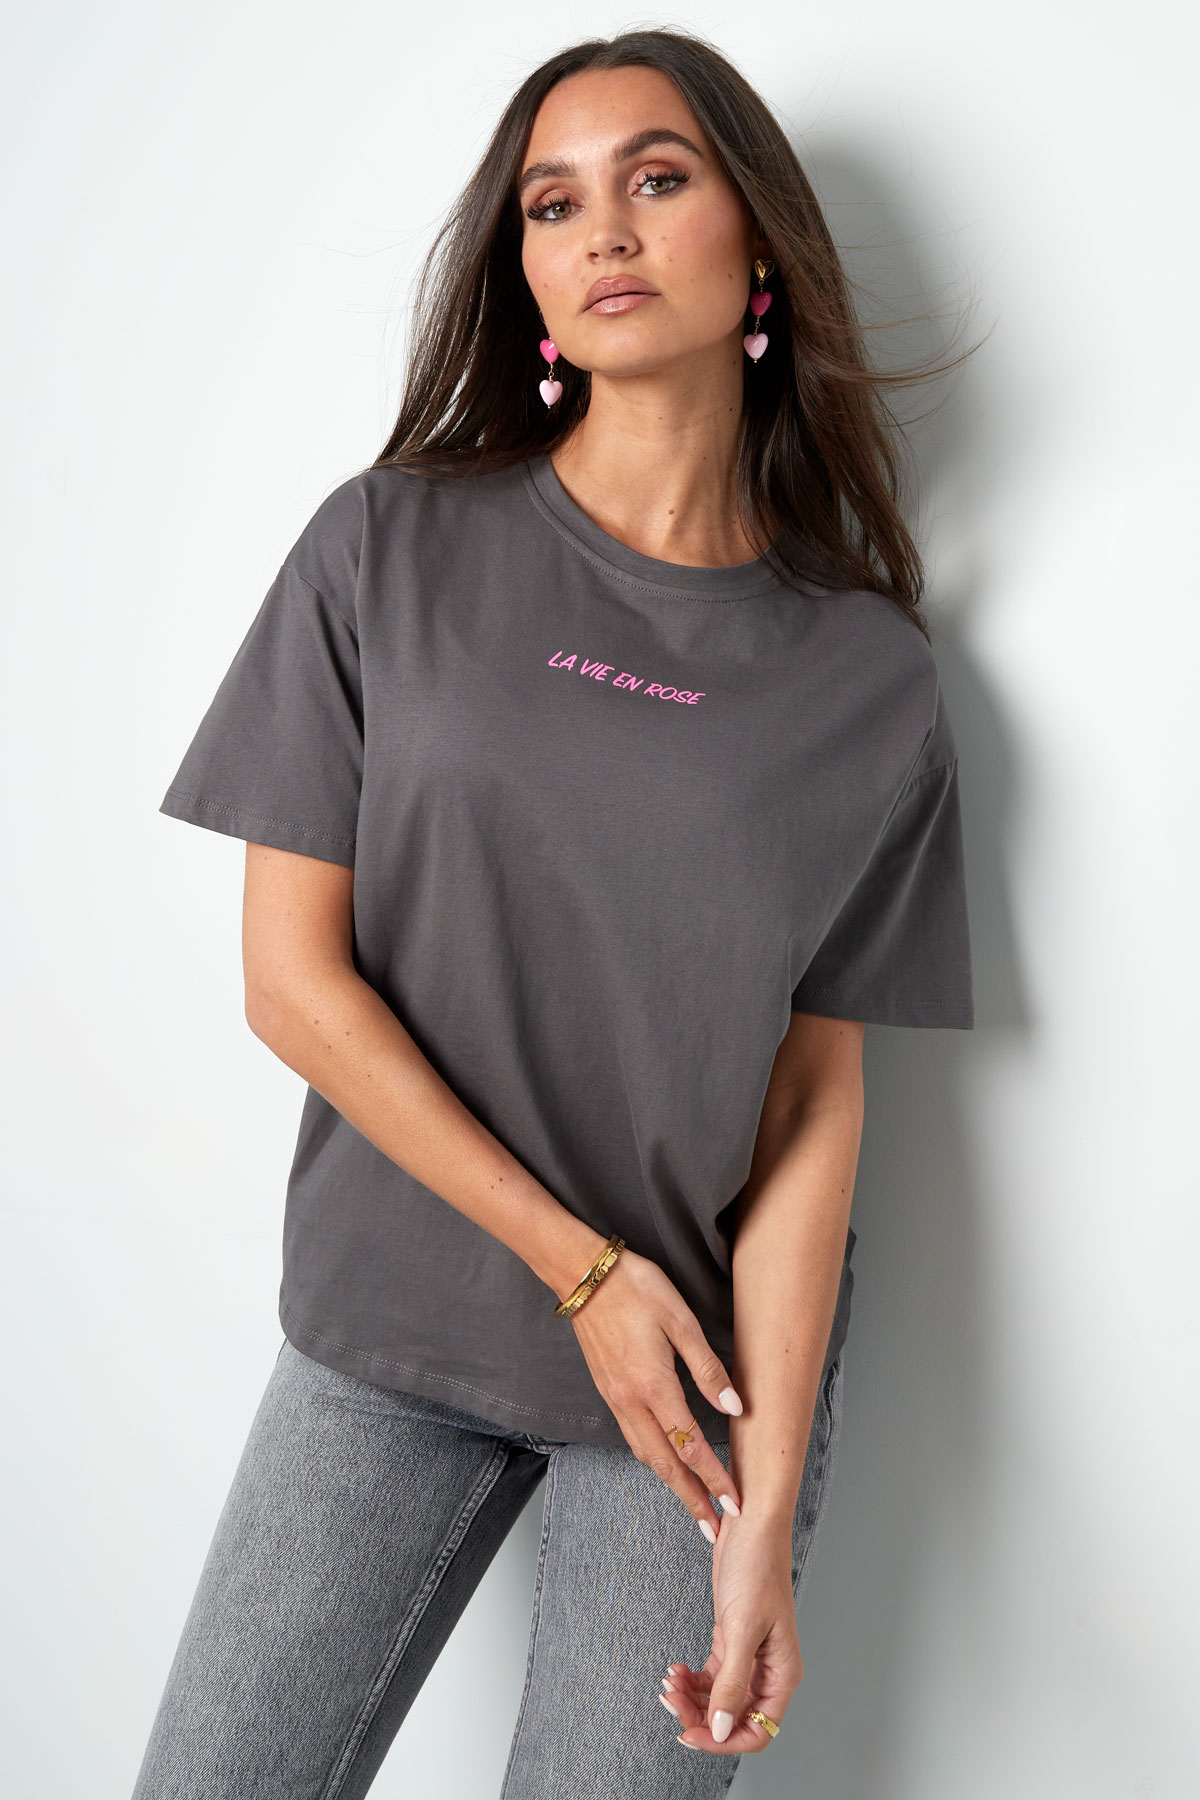 T-Shirt la vie en rose - dunkelgrau h5 Bild2